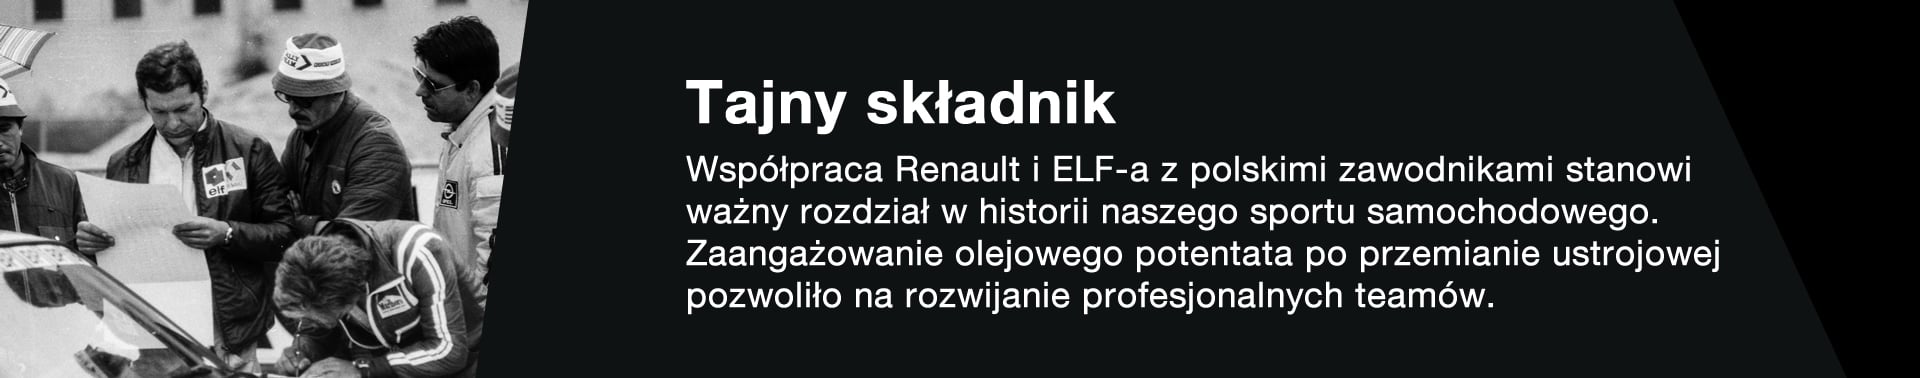 Historia Elf w Polsce